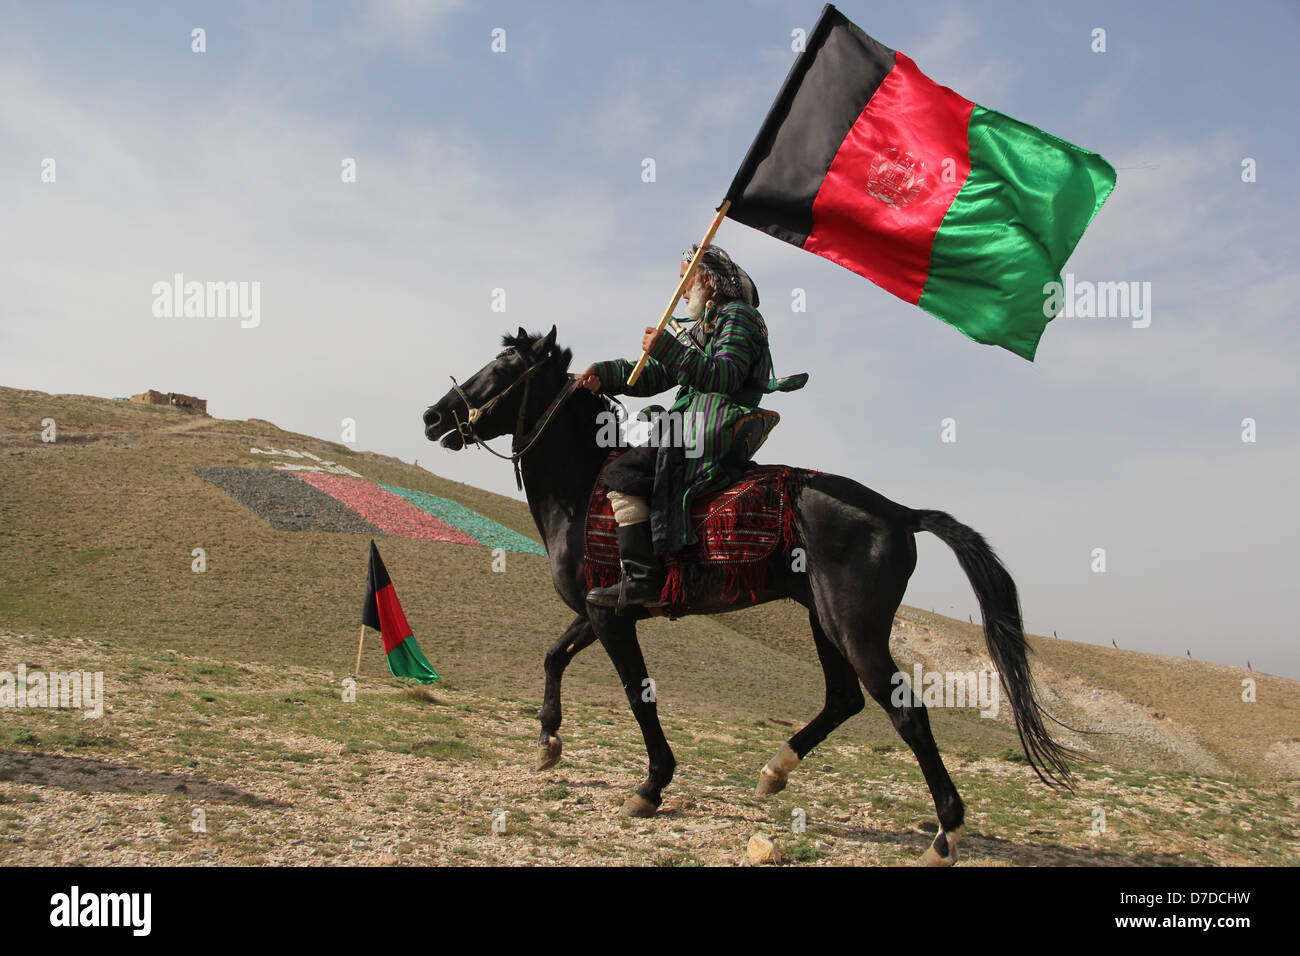 30+] Afghanistan Flag Wallpapers - WallpaperSafari